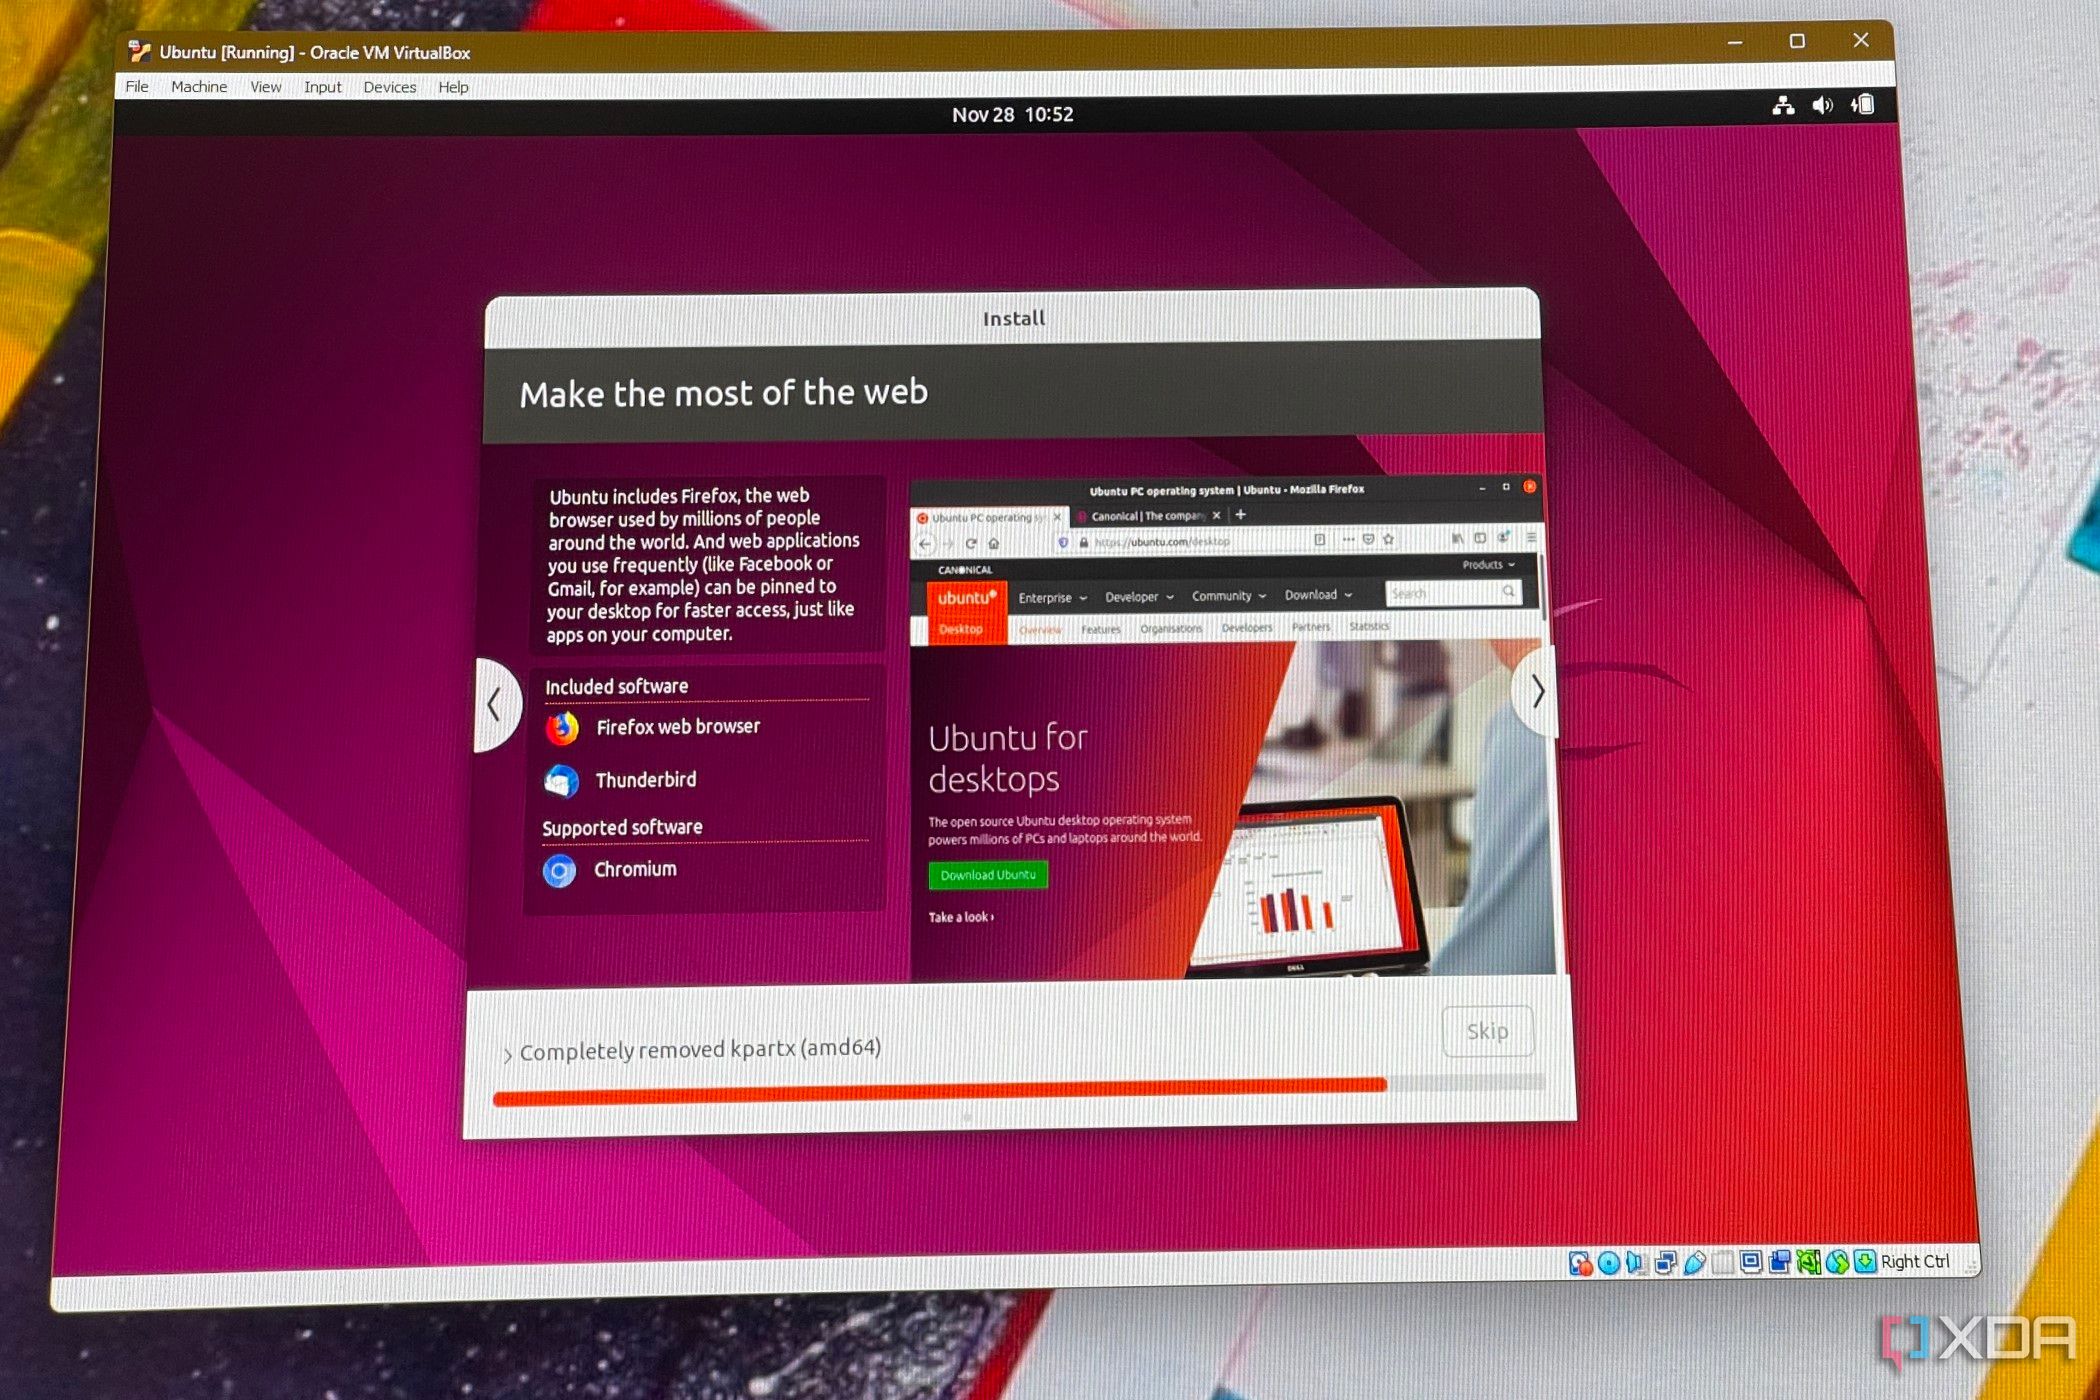 How to install Ubuntu in VirtualBox